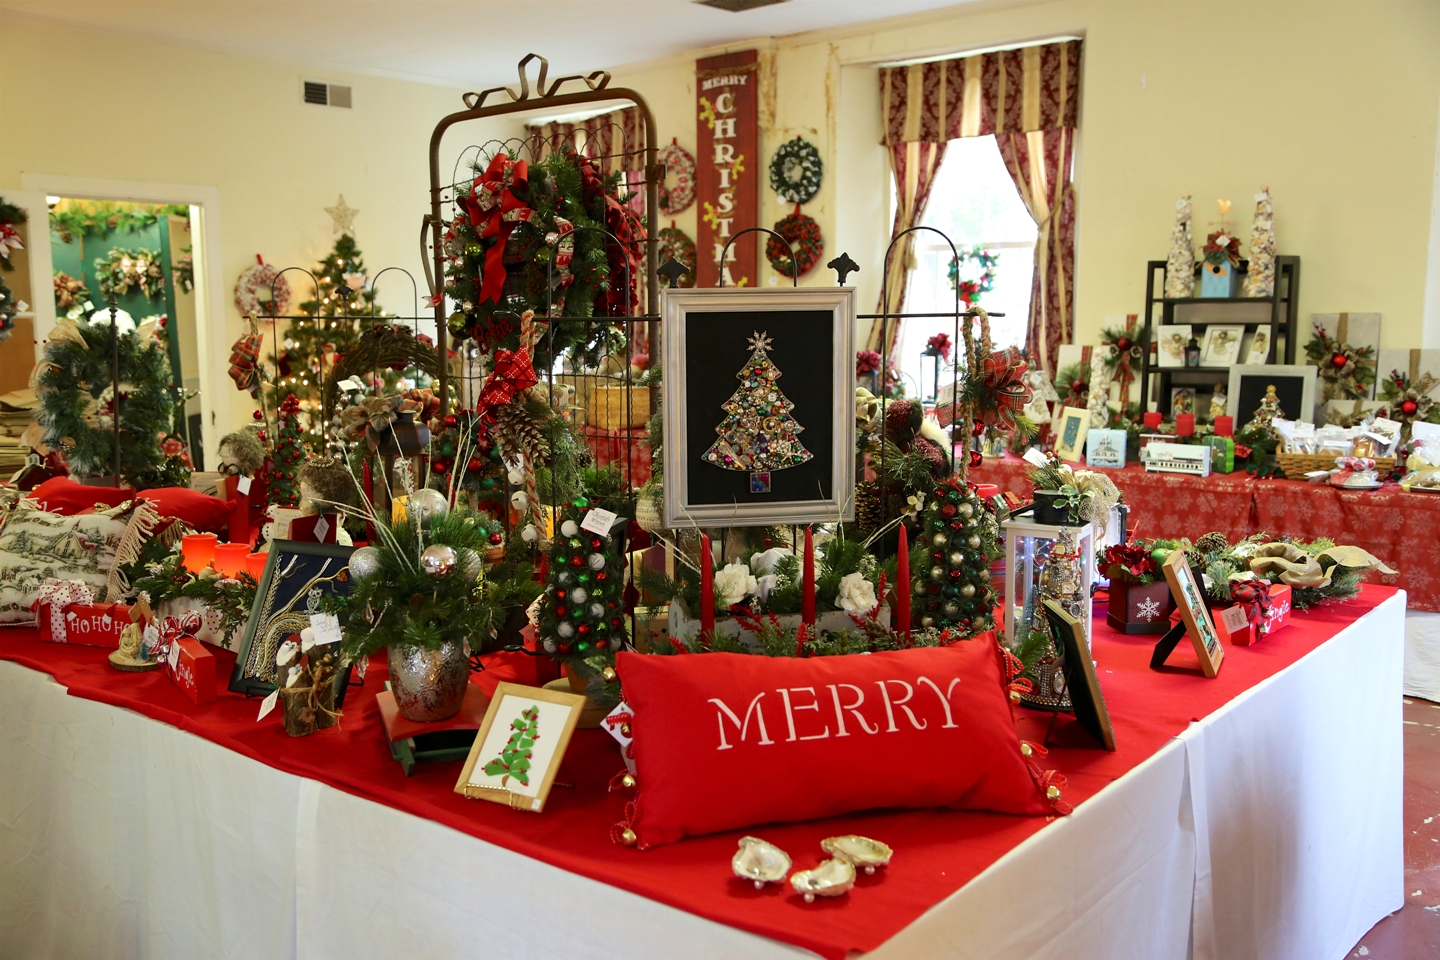 Christmas in St. Michaels celebrates joy December 911, 2022 Explore